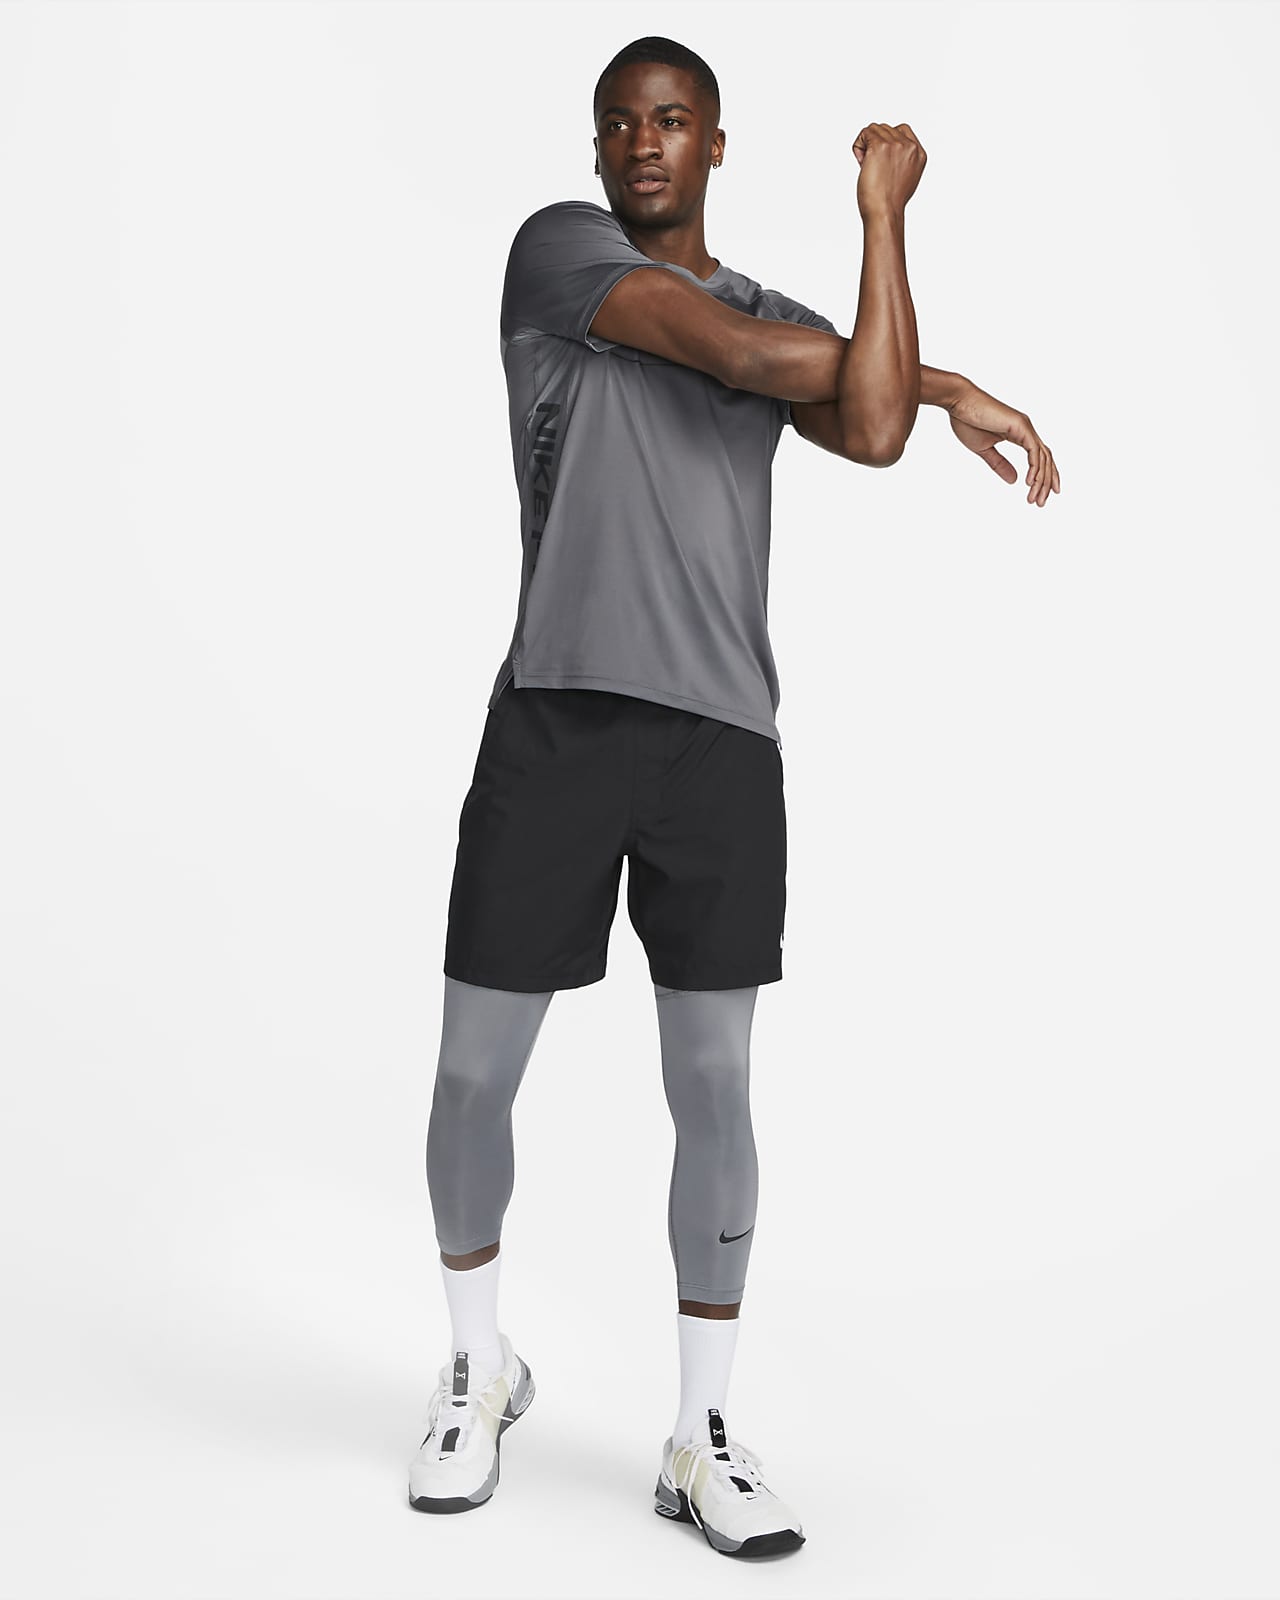 Men's PRO Dri-Fit 3/4 Tight from Nike